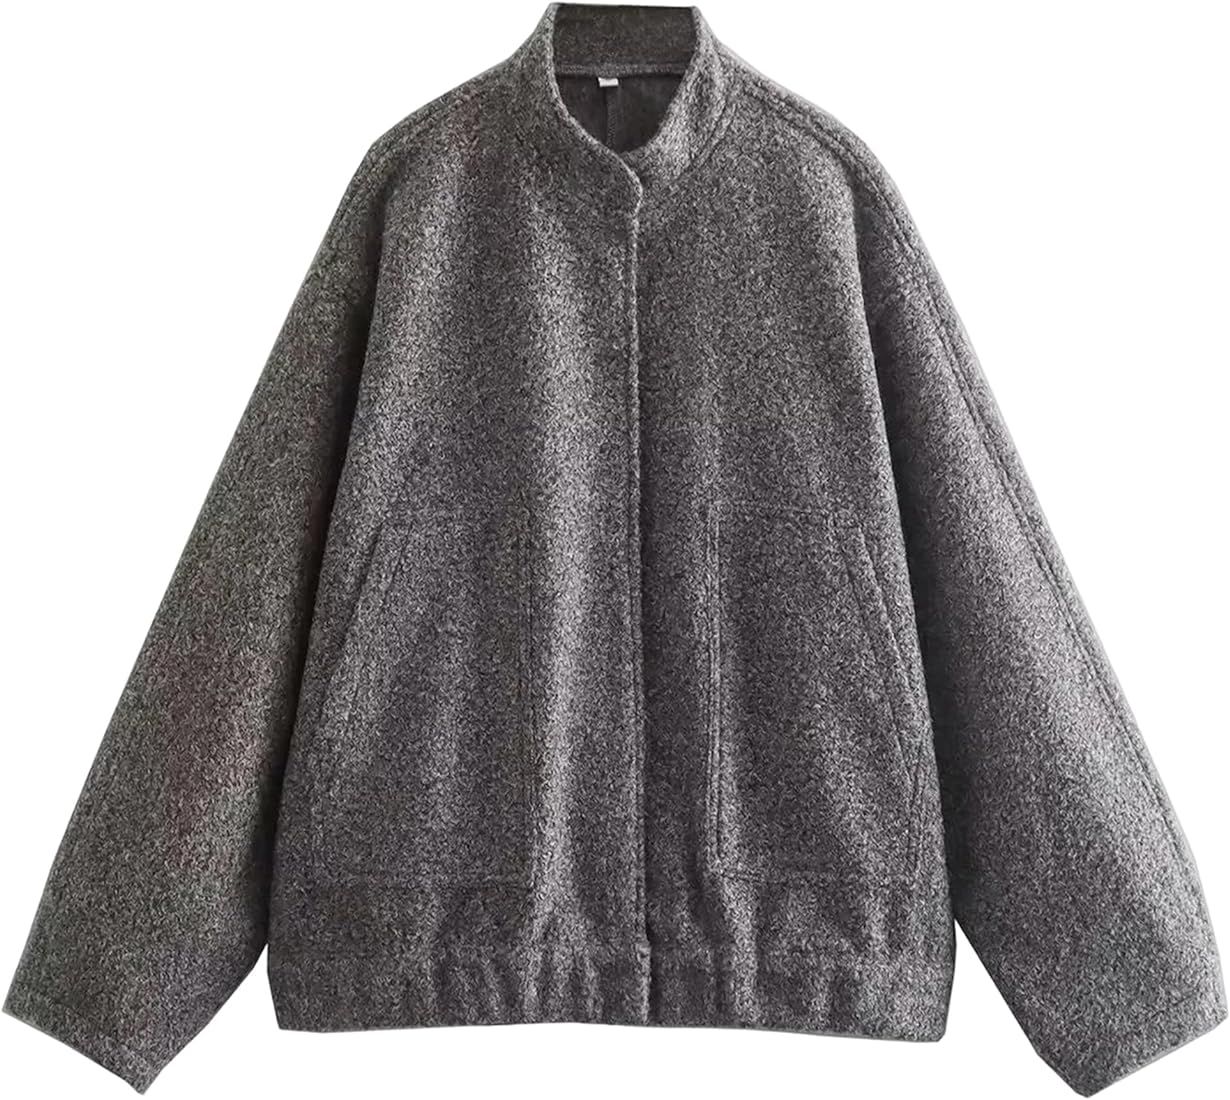 Hixiaohe Women's Oversized Wool Blend Jackets Long Sleeve Button Down Casual Bomber Jacket Outwear w | Amazon (UK)